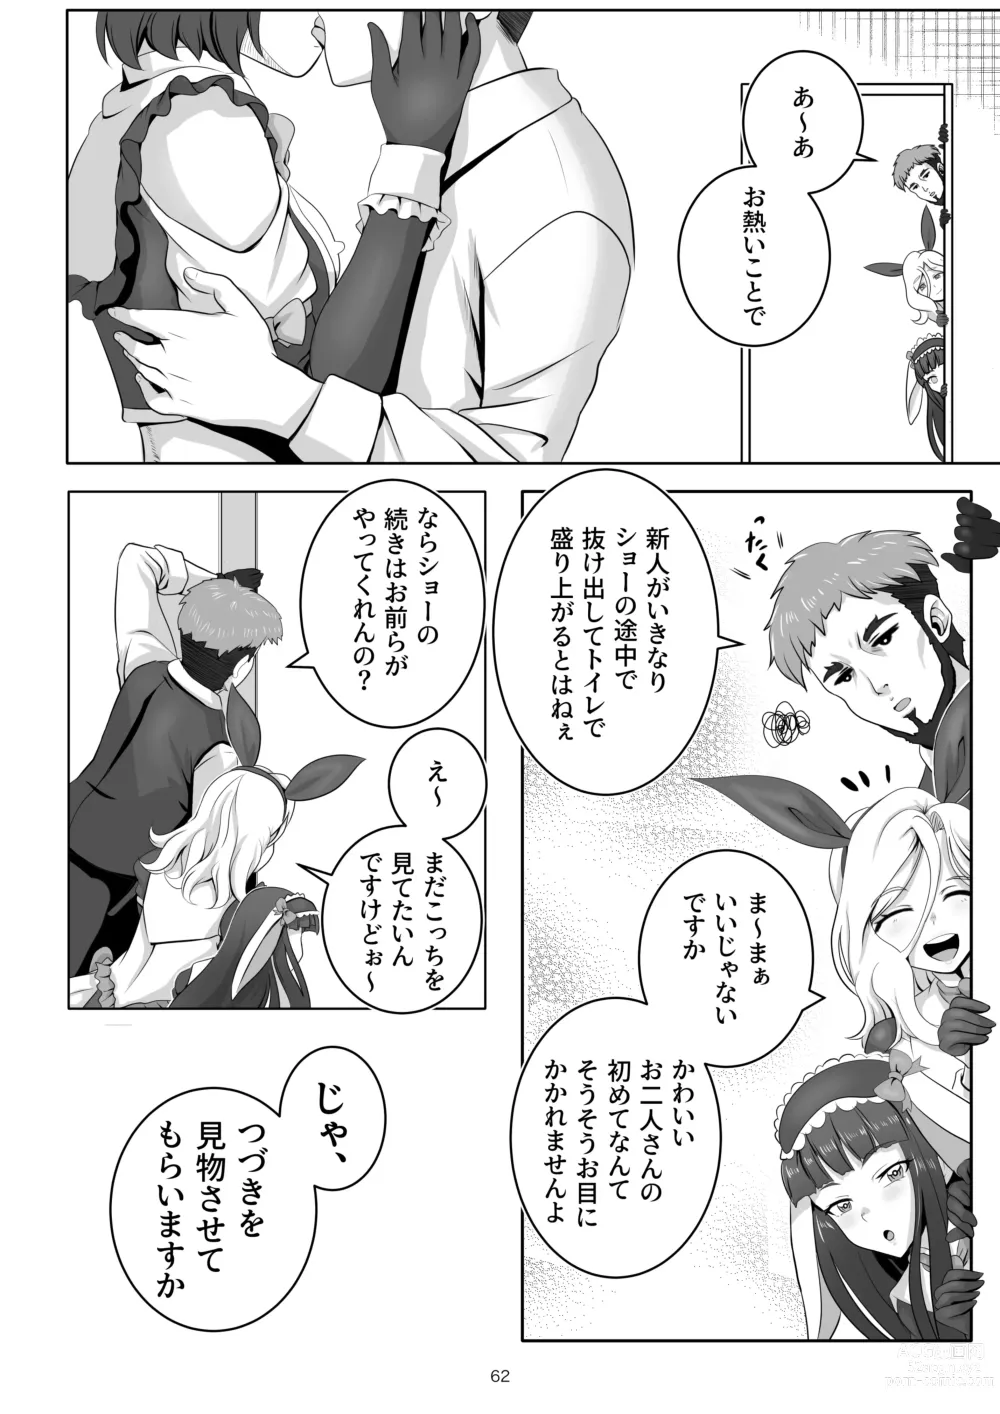 Page 62 of doujinshi Bunny x Baito Party